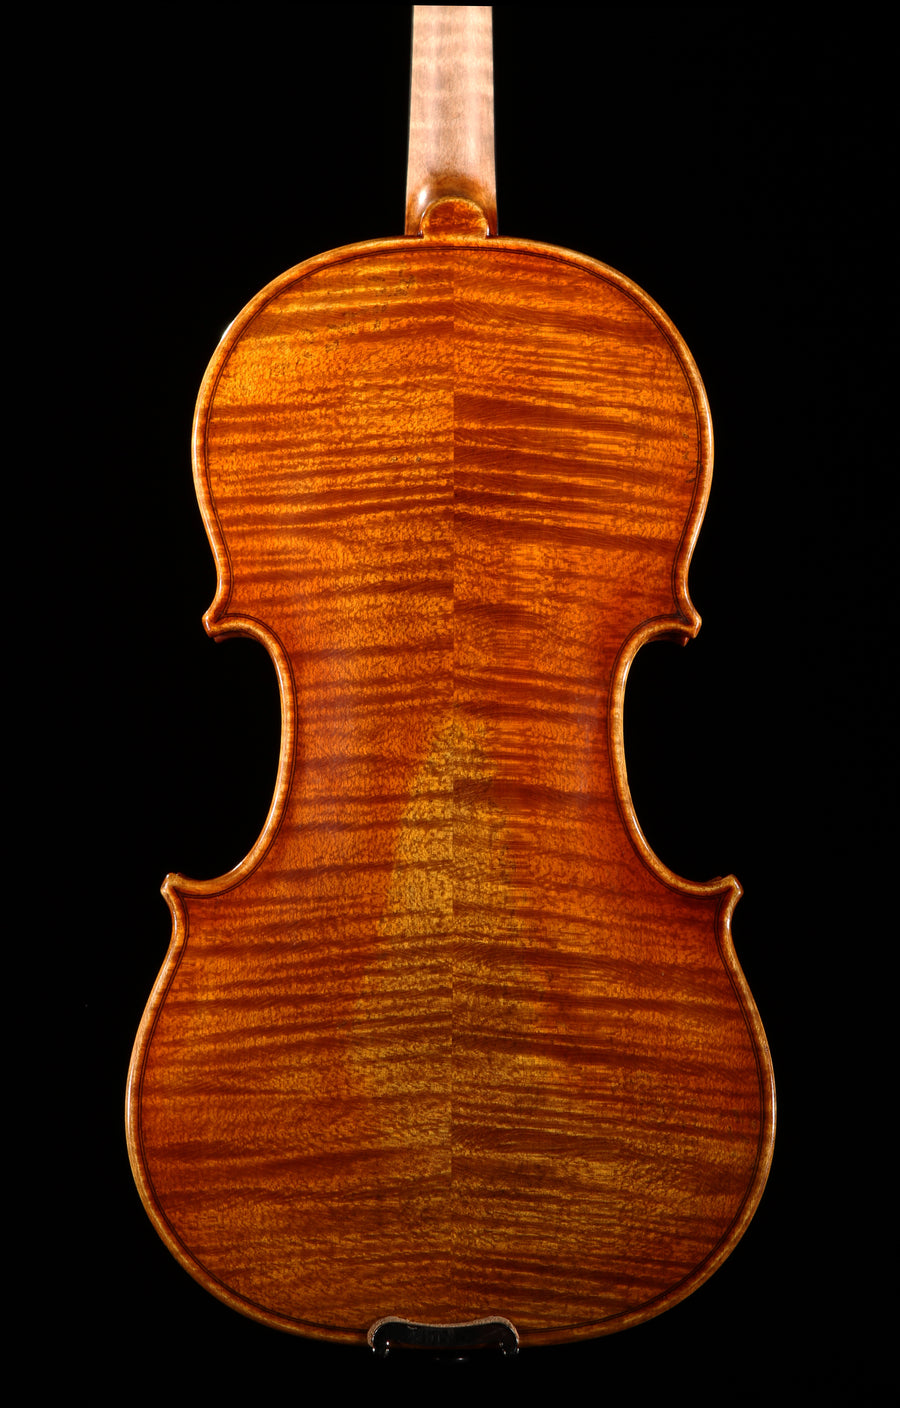 LeVesque Model 50 Violin